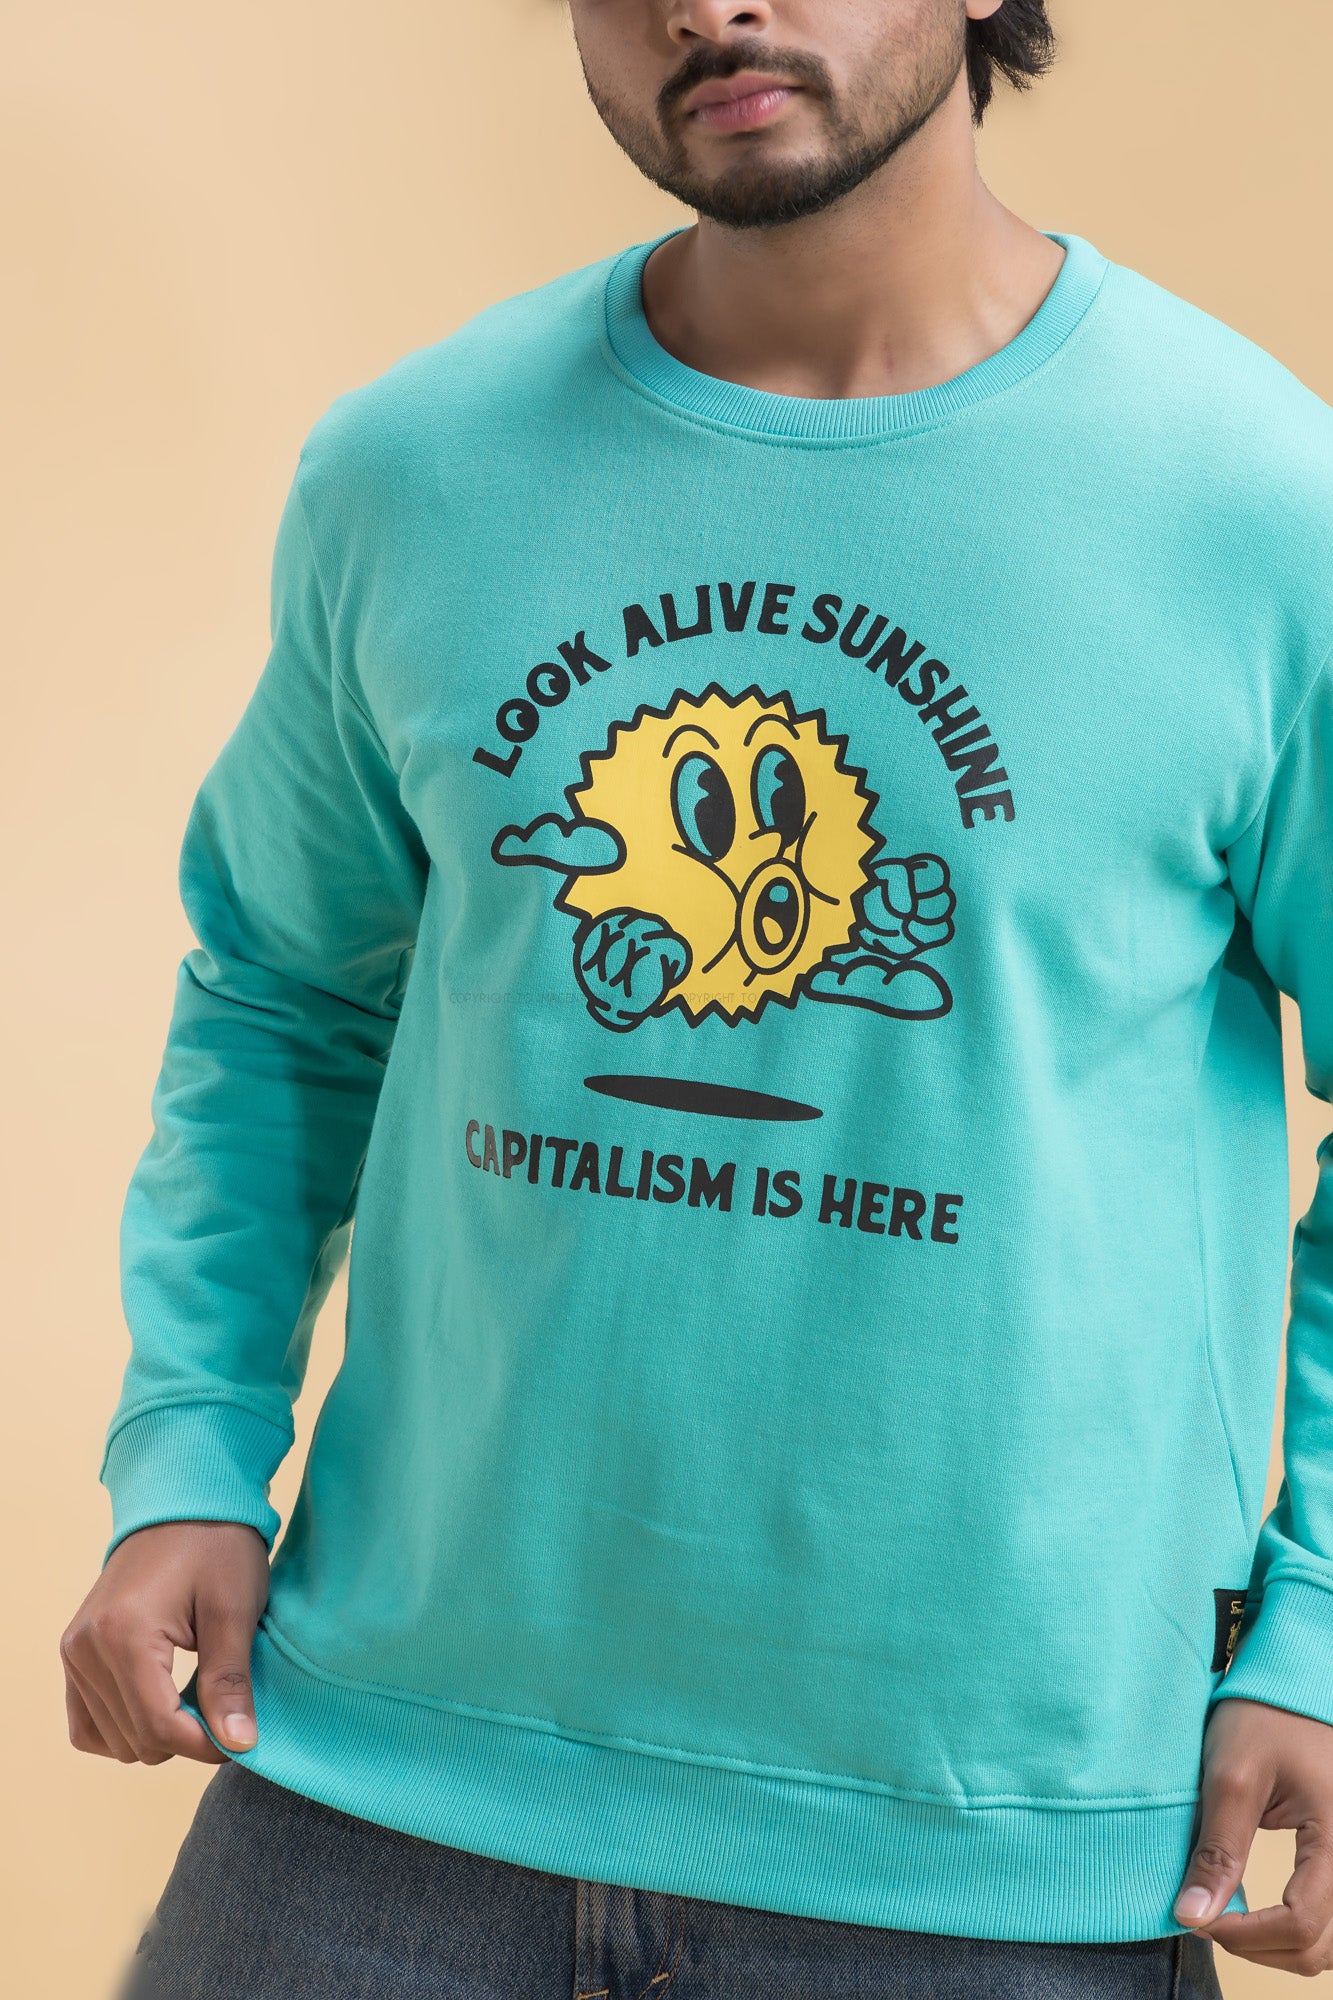 Capitalism is Here Turquoise Printed Full Sleeves Unisex Sweatshirt